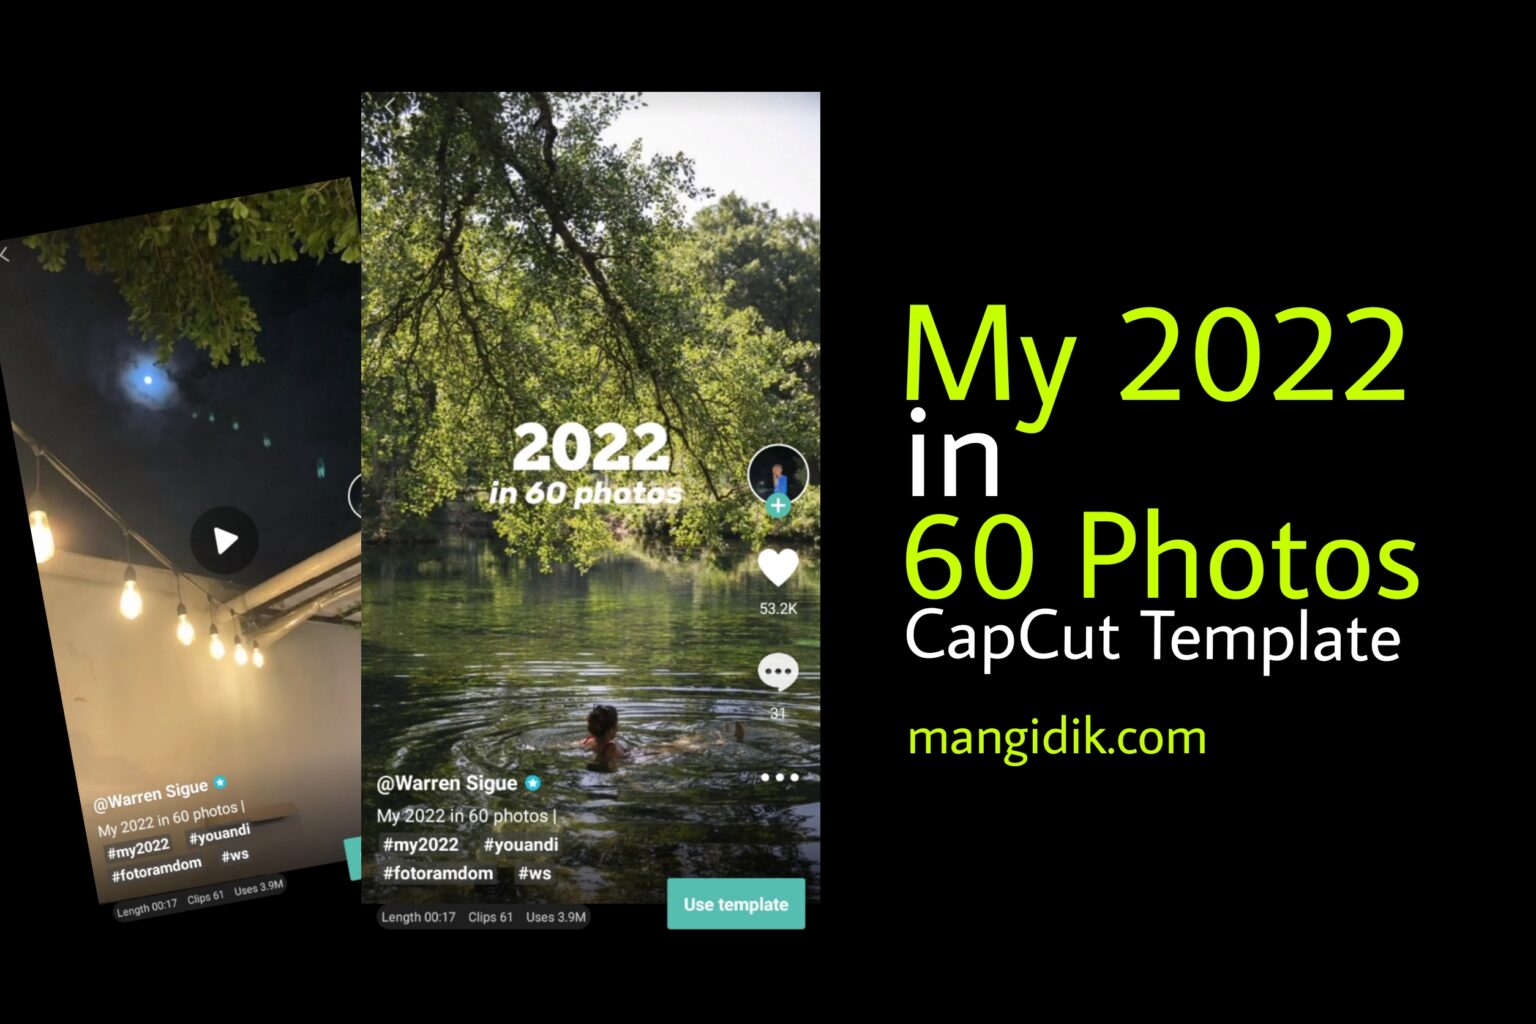 My 2022 in 60 Photos CapCut Template Link, New Trend Mang Idik